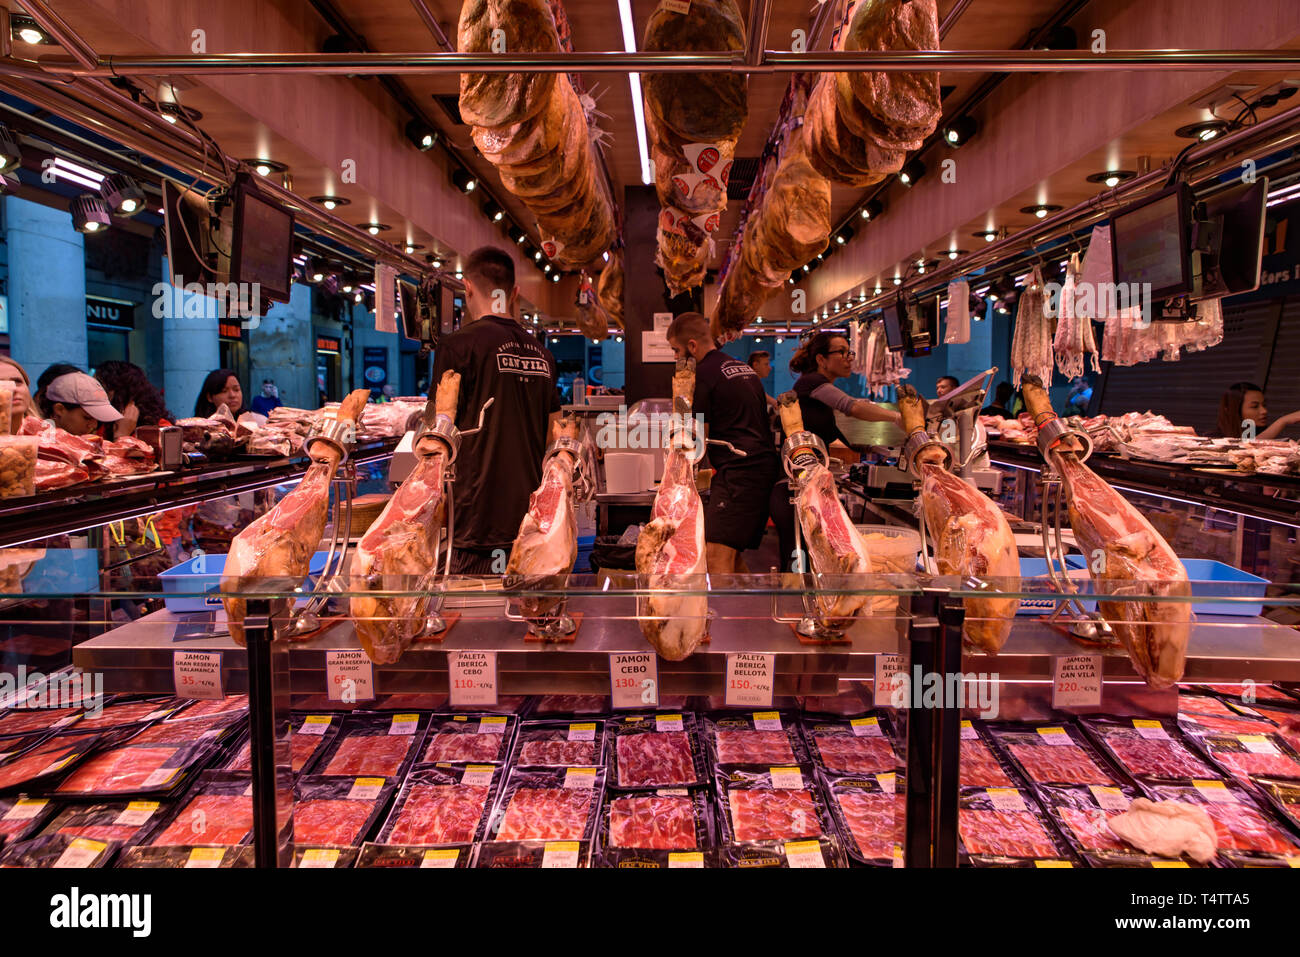 Les étals de vente Jamón Serrano, le jambon espagnol salés à sec fait avec les porcs ibériques, à Barcelone, Espagne Banque D'Images